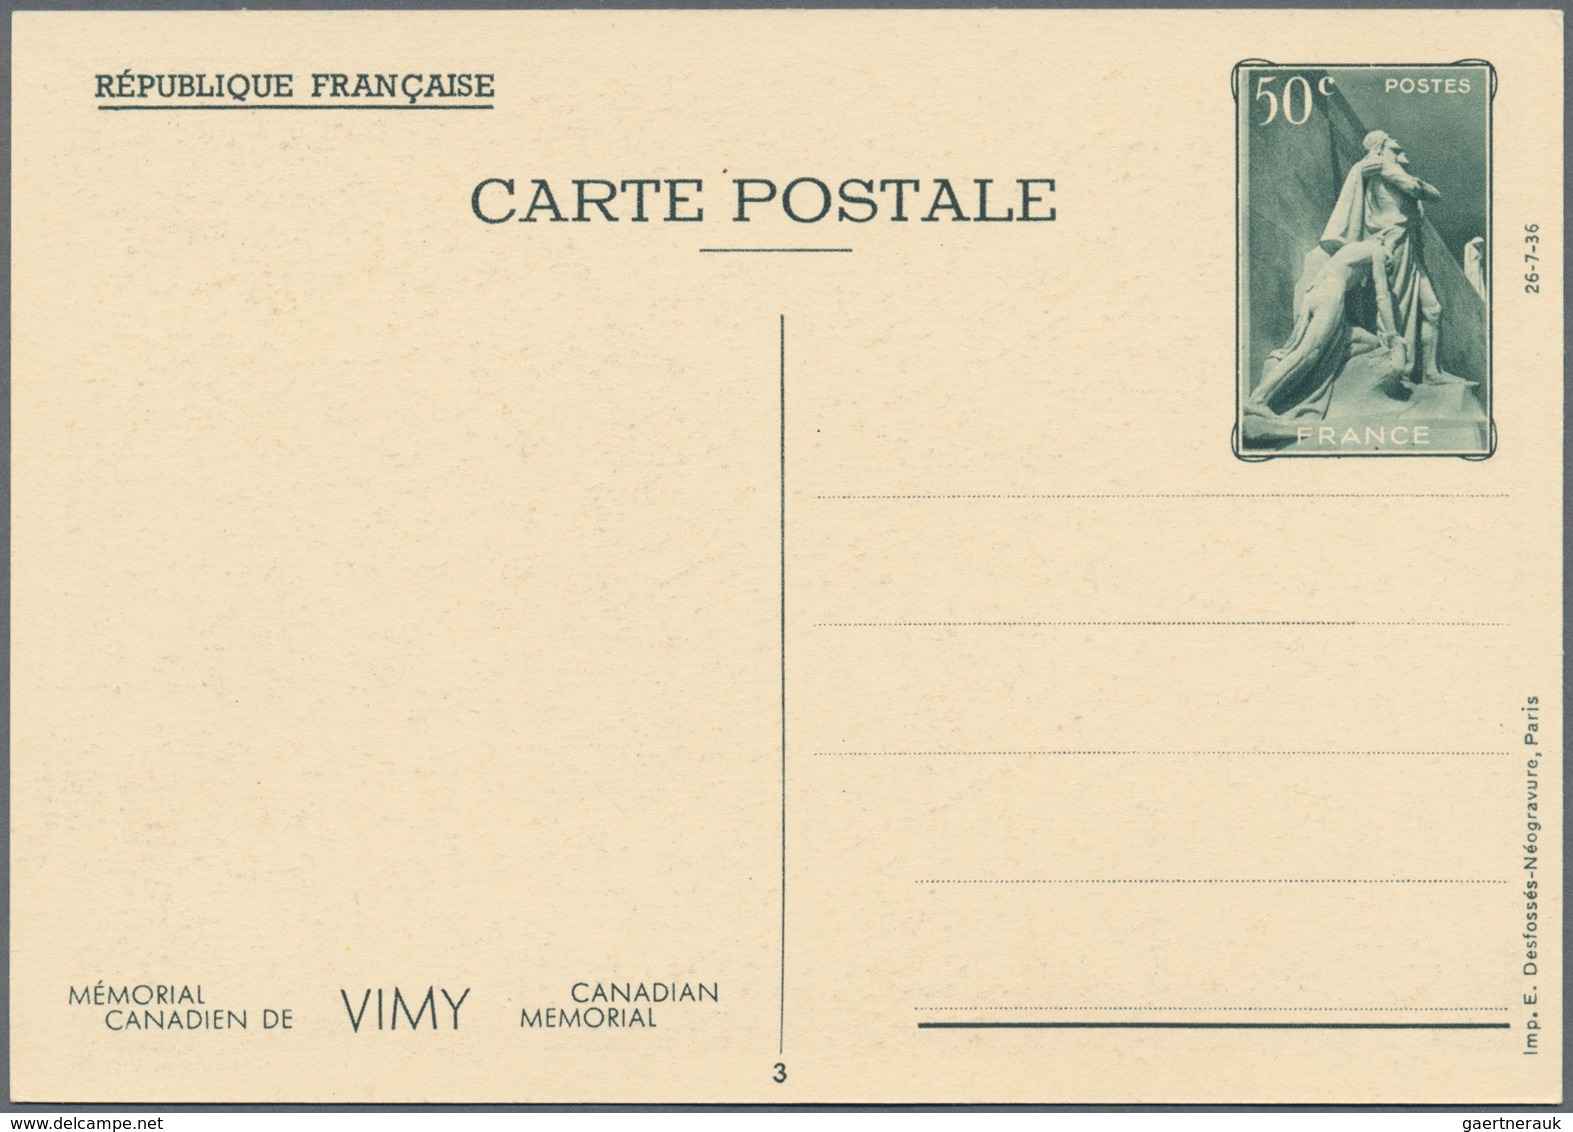 Frankreich - Ganzsachen: 1938, 50 C Vimy postal stationery picture postcards, complete set of 10 ite